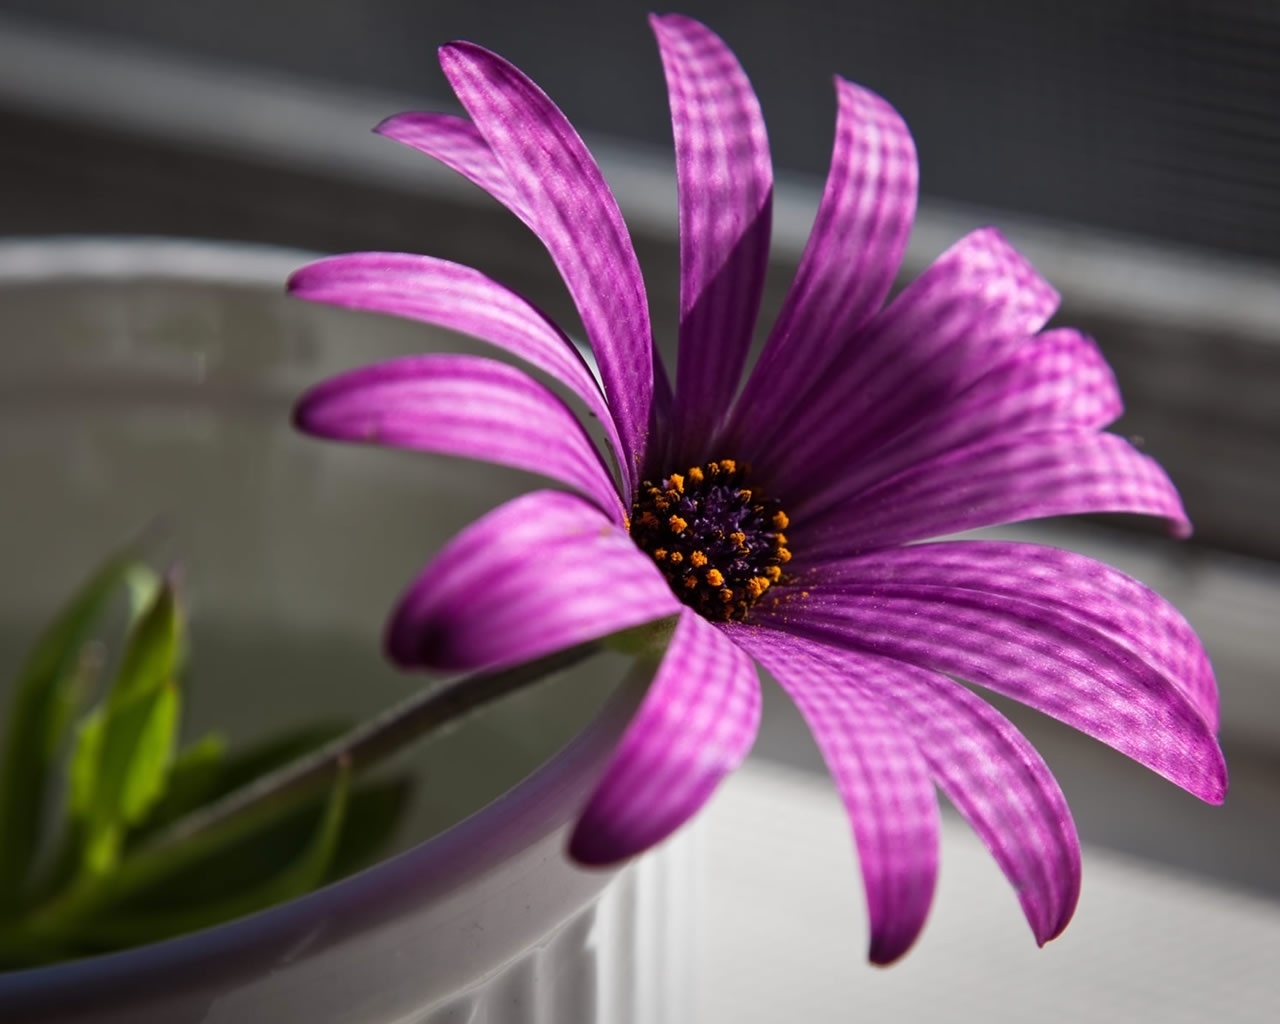 Superb Purple Flower for 1280 x 1024 resolution